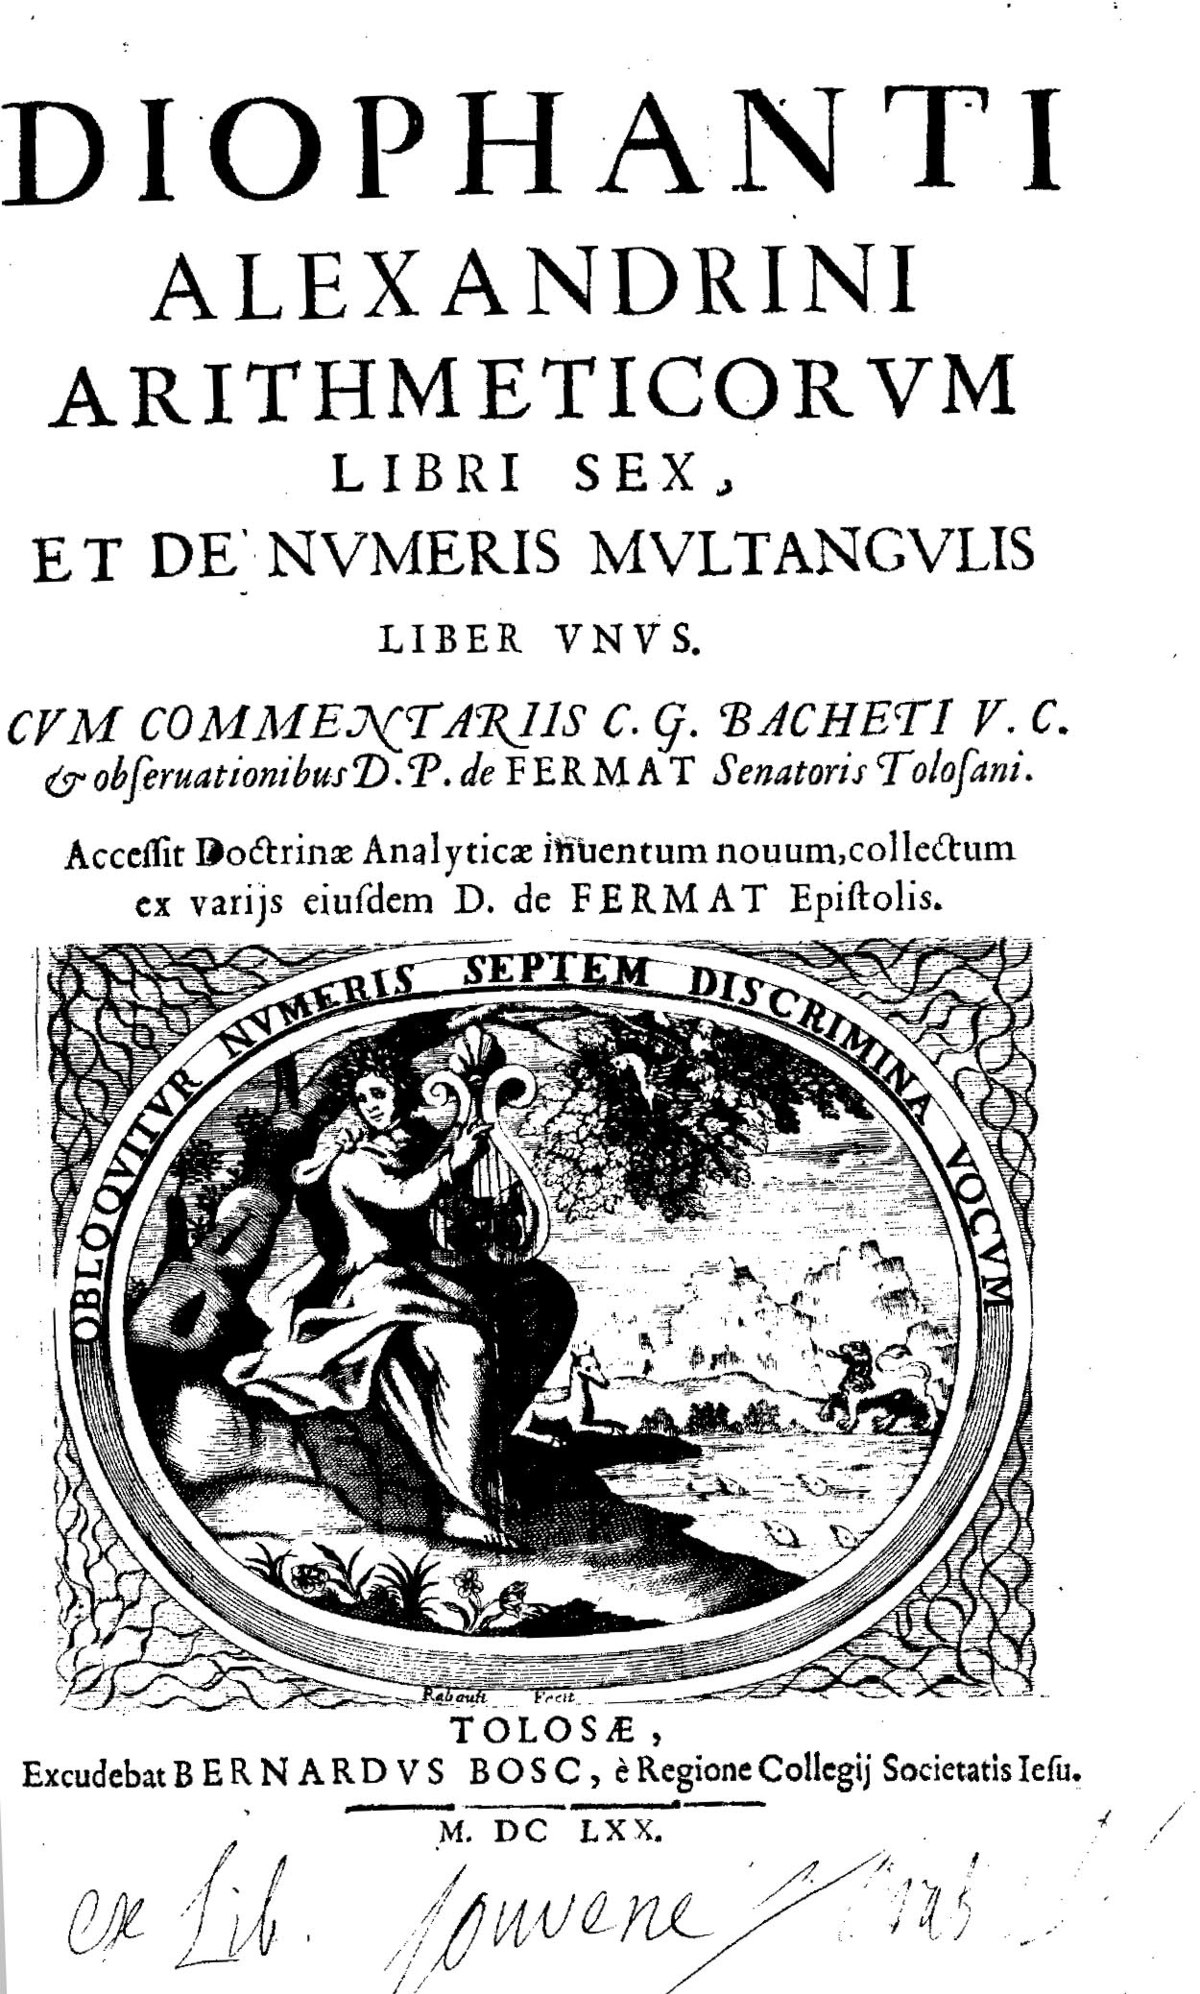 File Diophantus Aritmeticorum Libri 6 1670 842640 Jpeg Wikimedia Commons